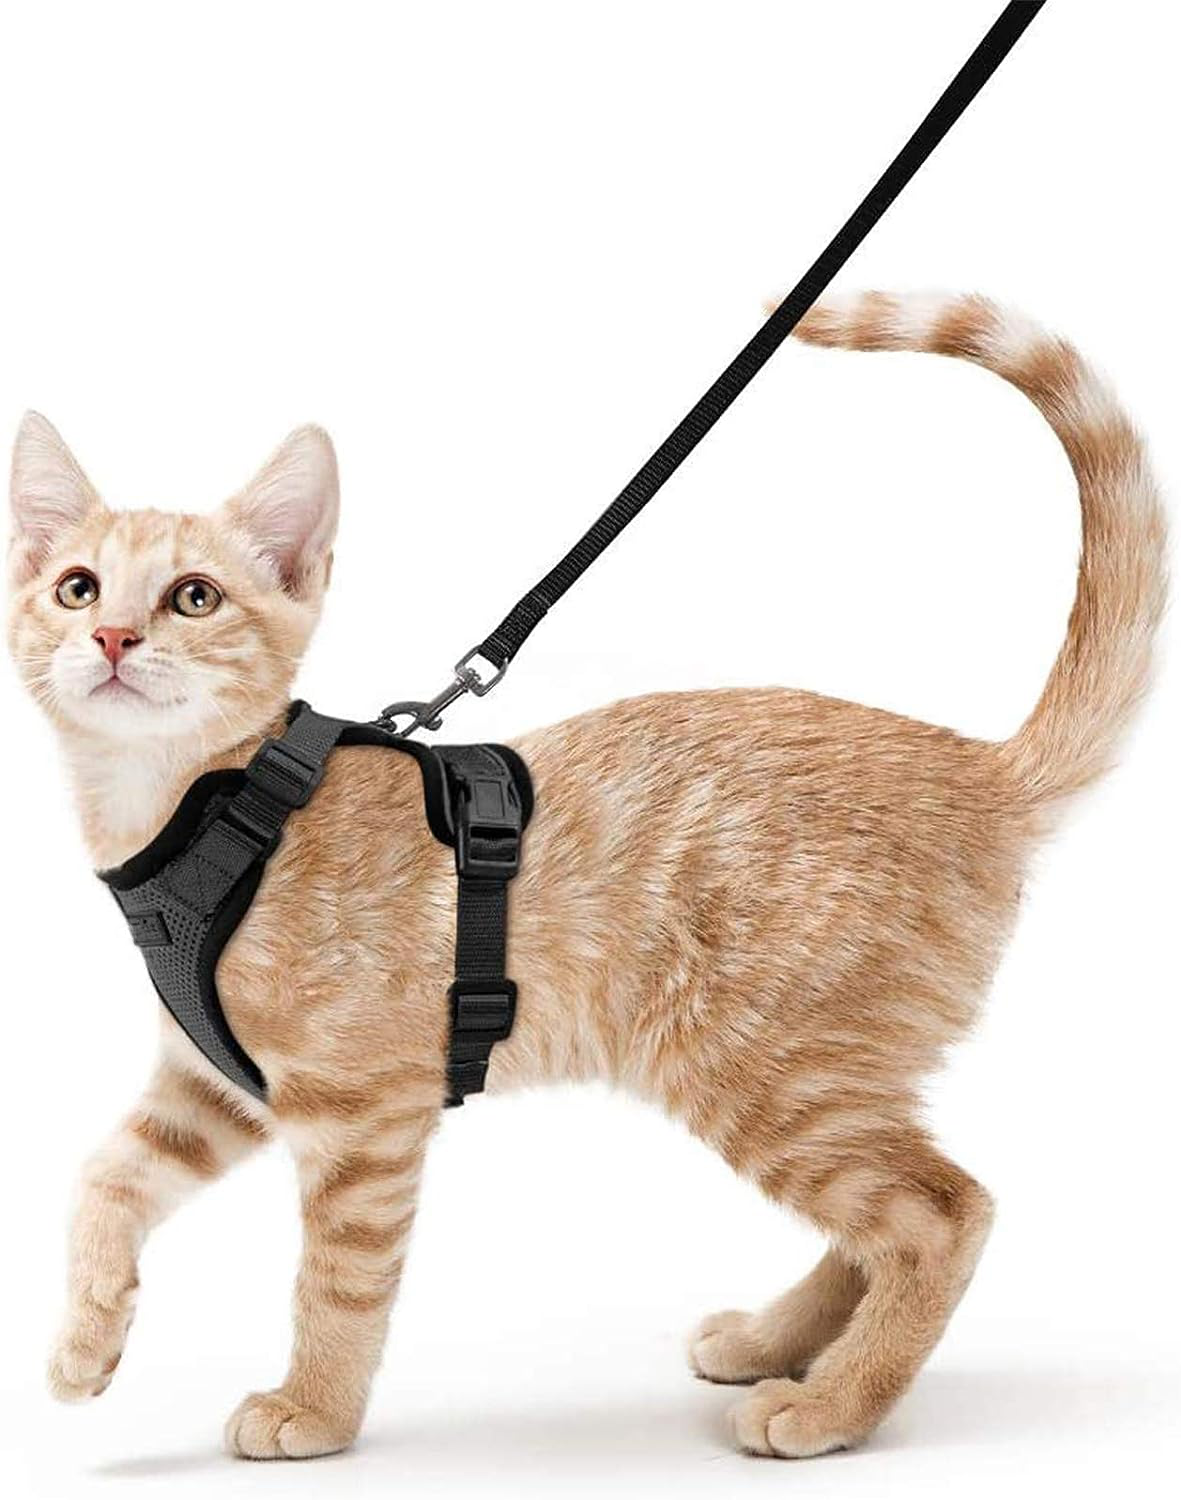 Escape Proof Cat Harness